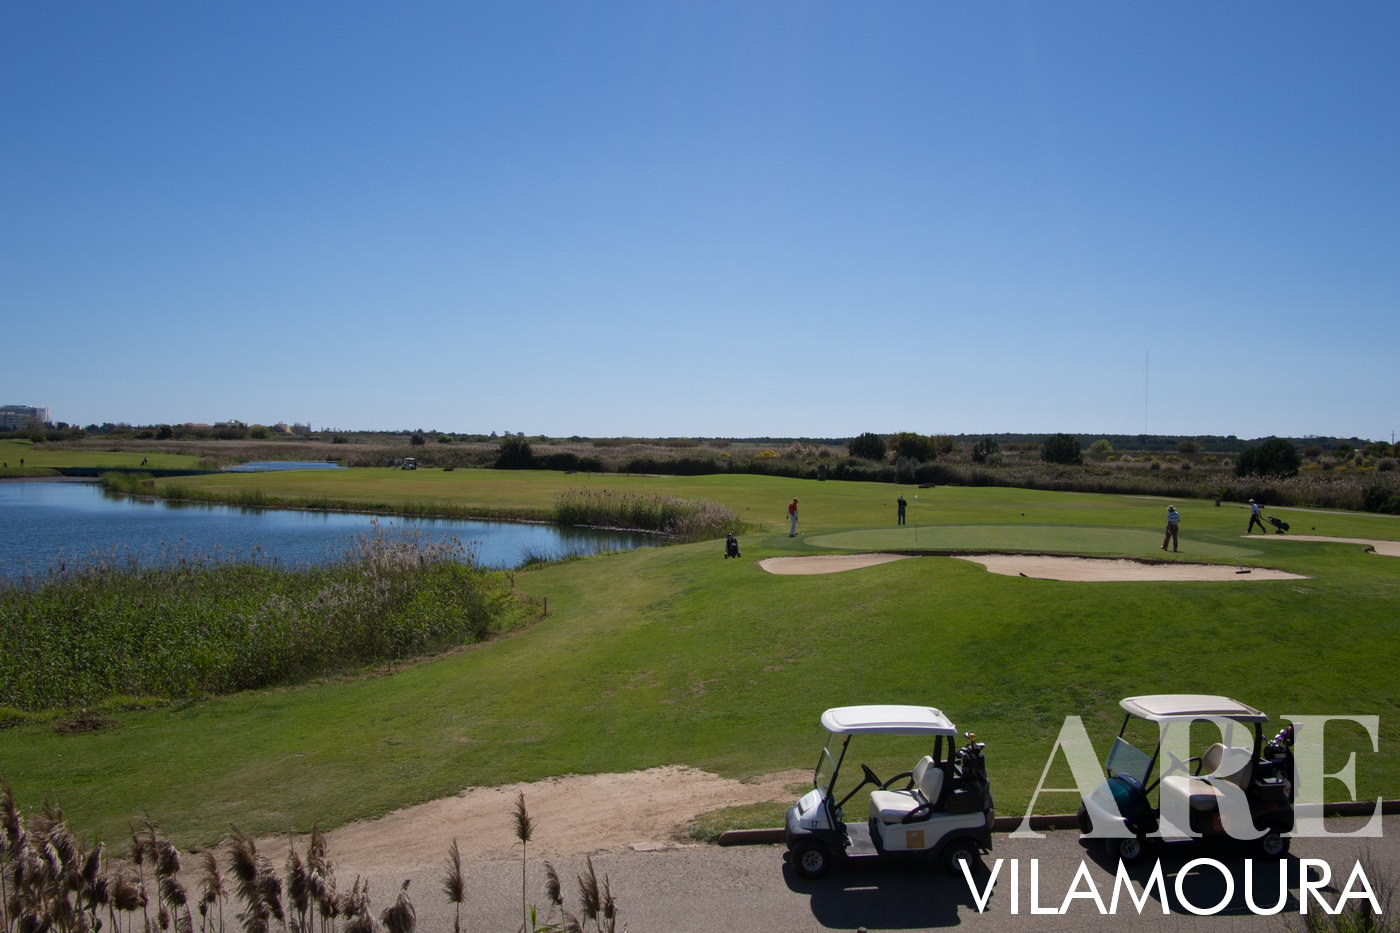 Vilamoura is a golfer's paradise